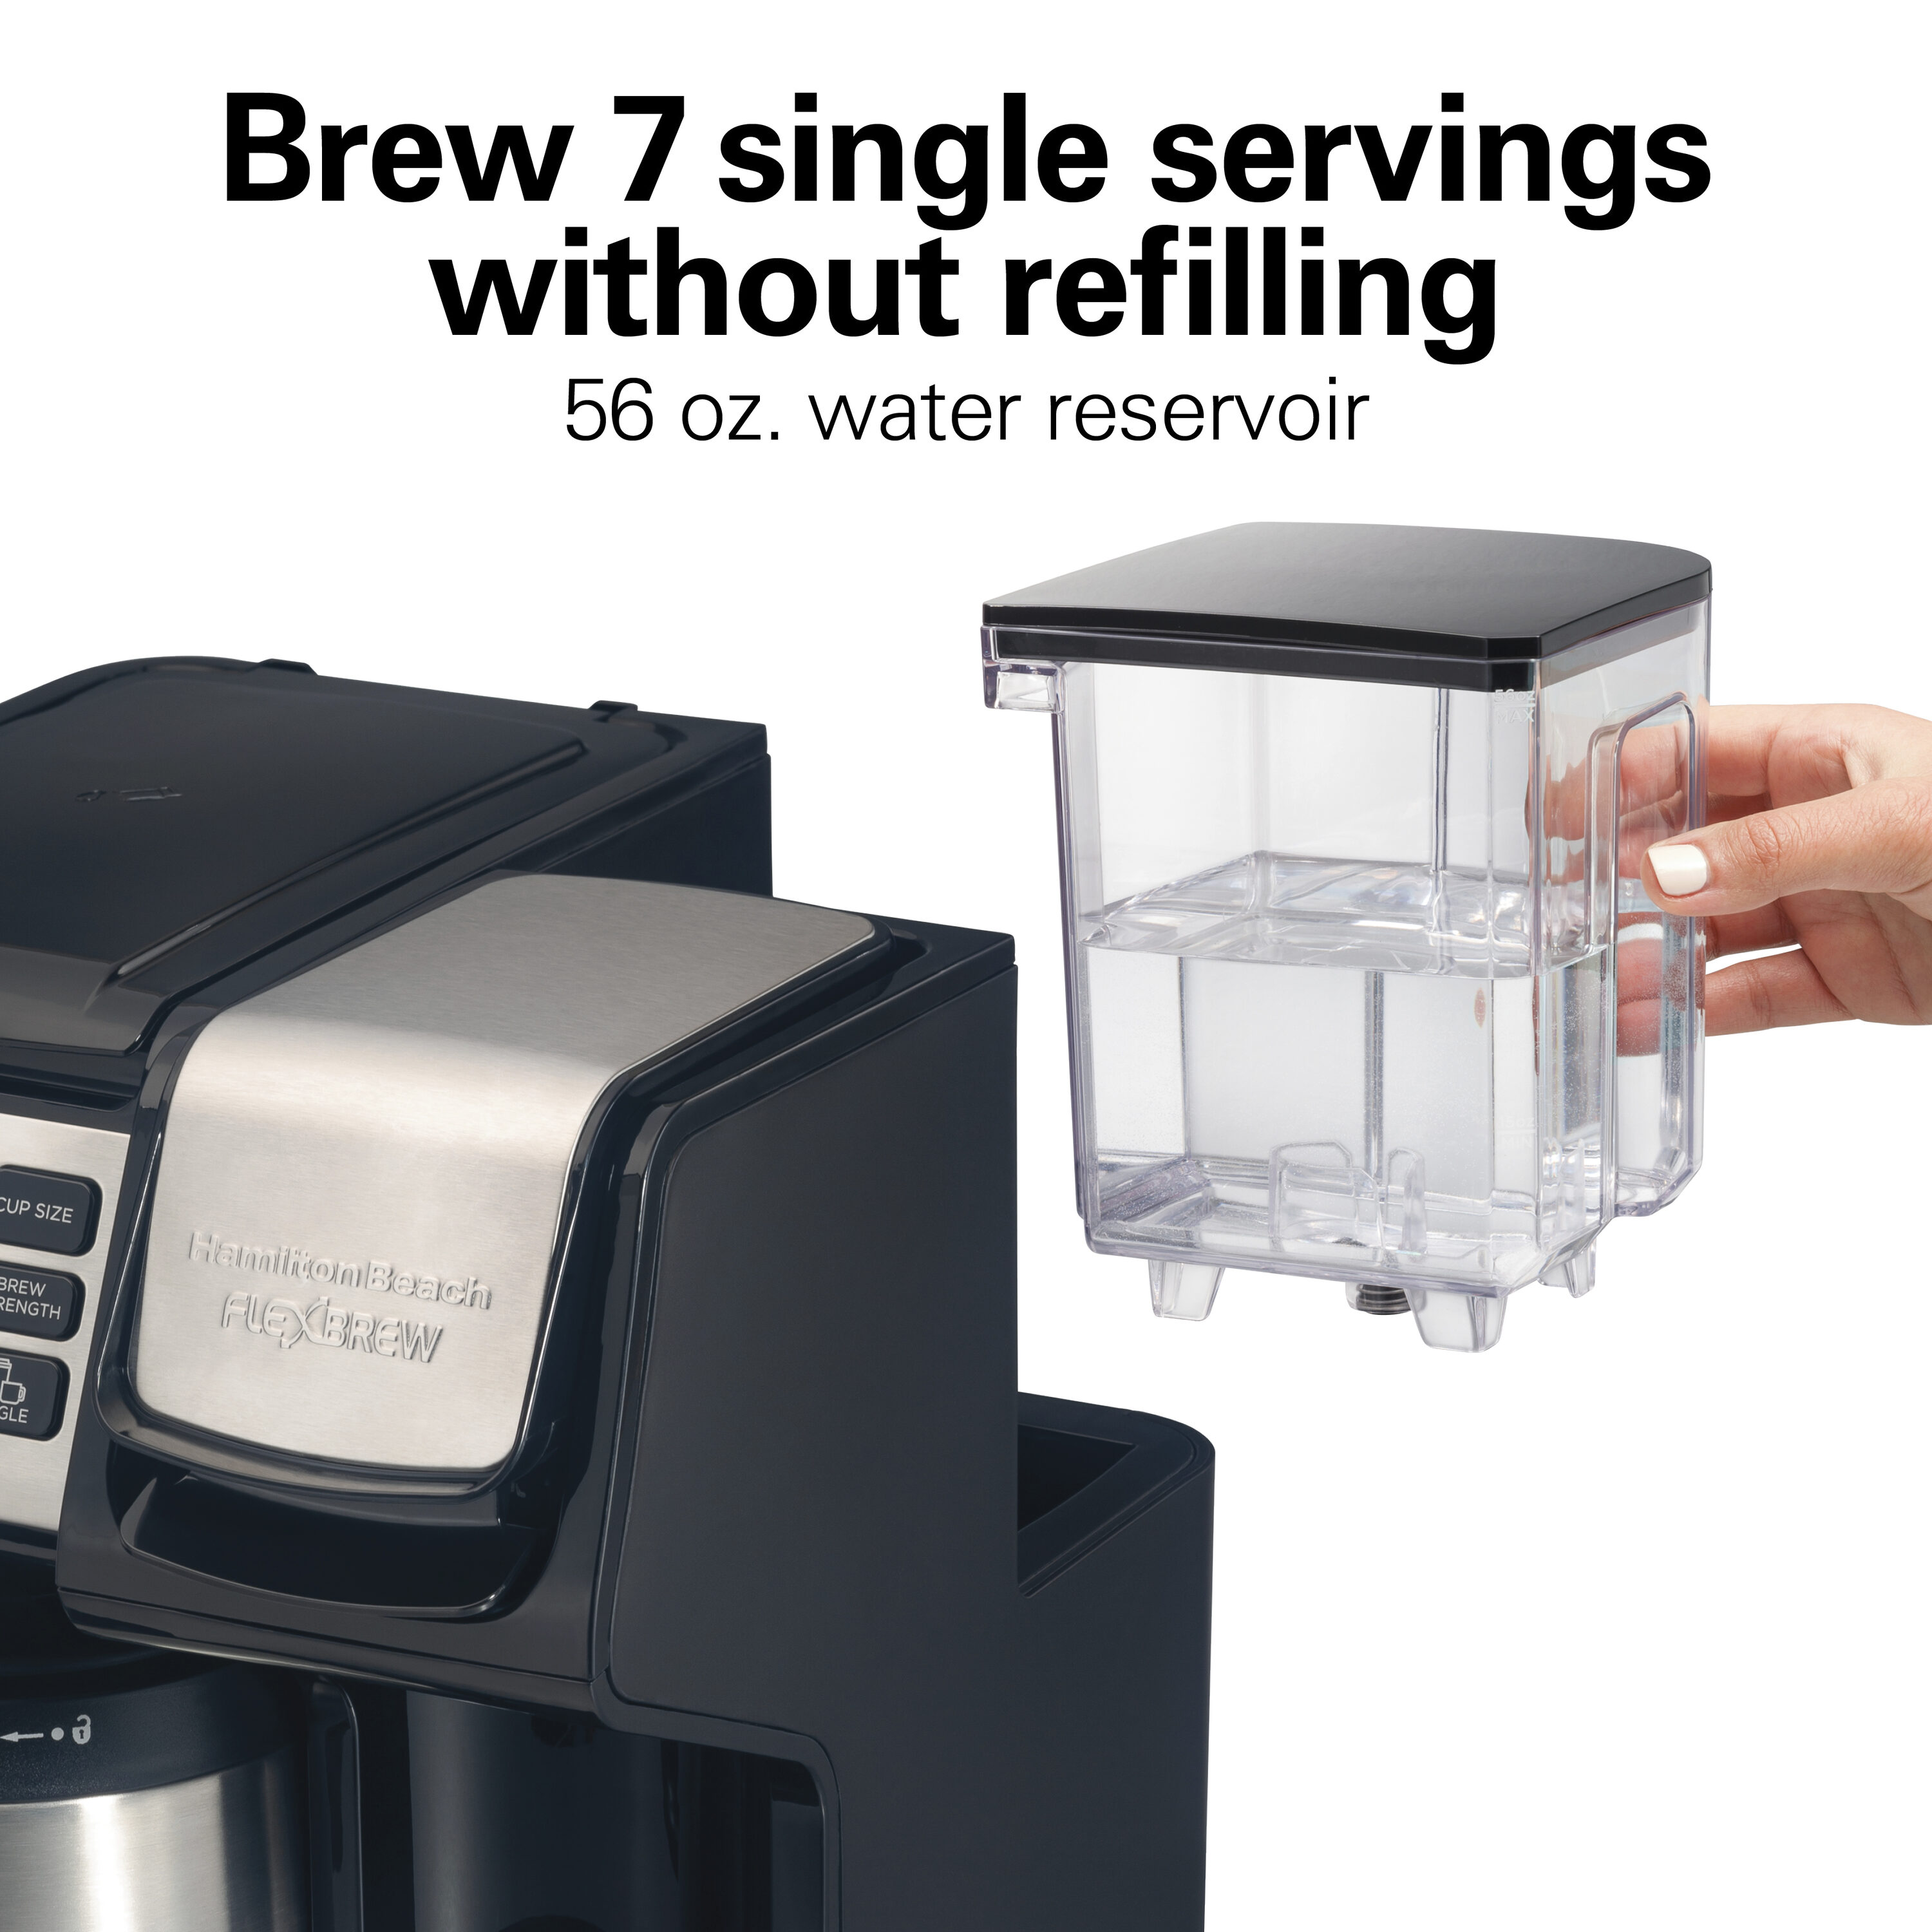 Hamilton Beach 49901 Black FlexBrew Single-Serve Coffee Maker with Removable Reservoir